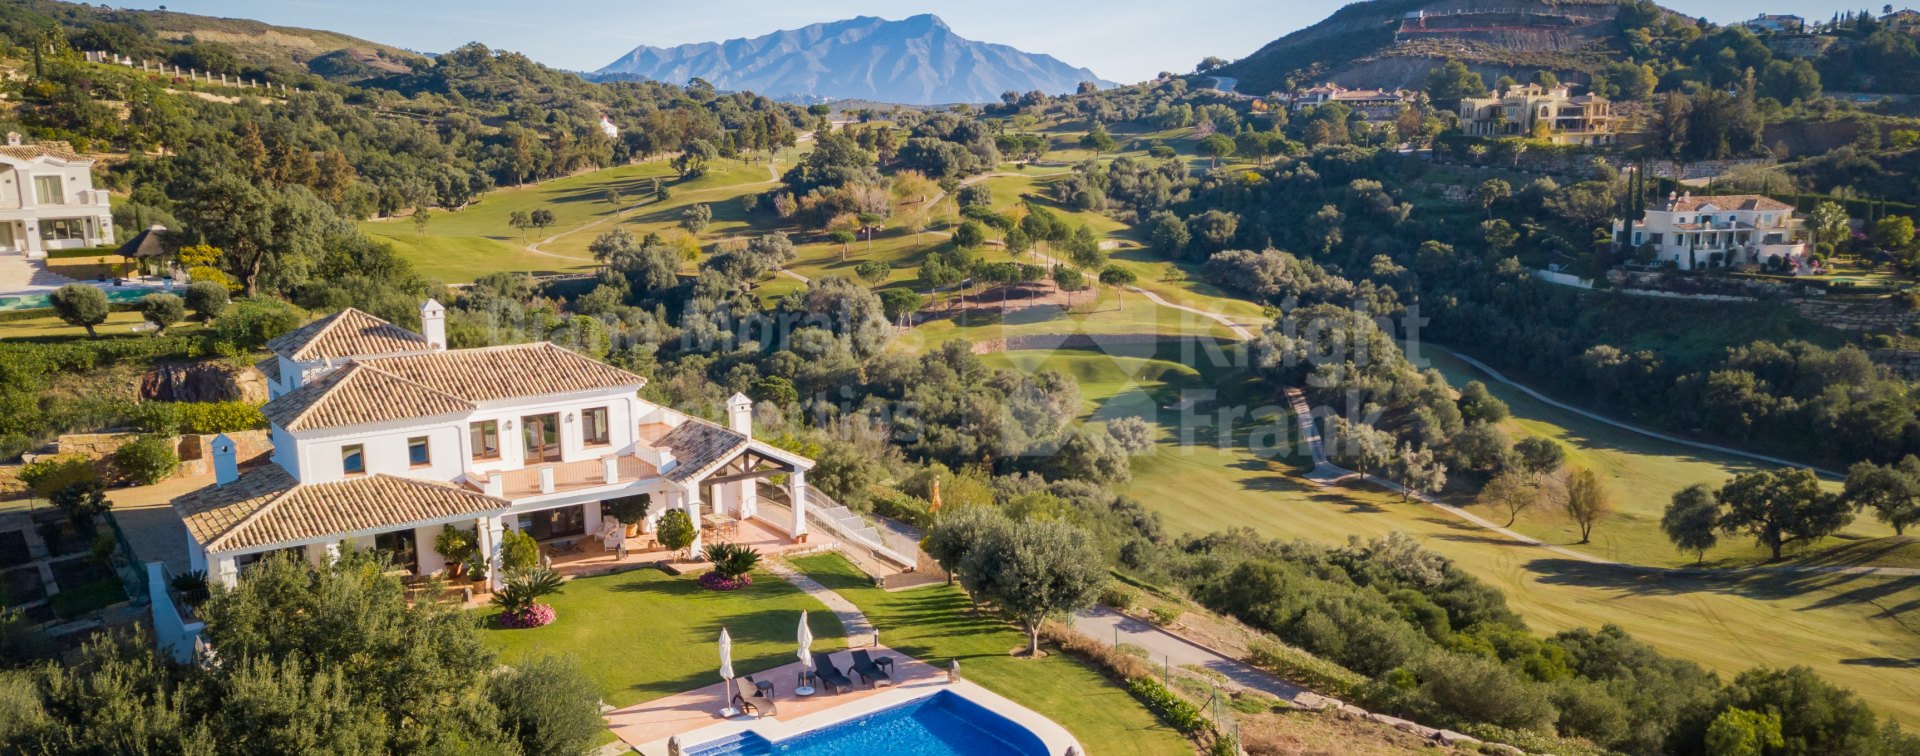 Marbella Club Golf Resort, Une villa captivante